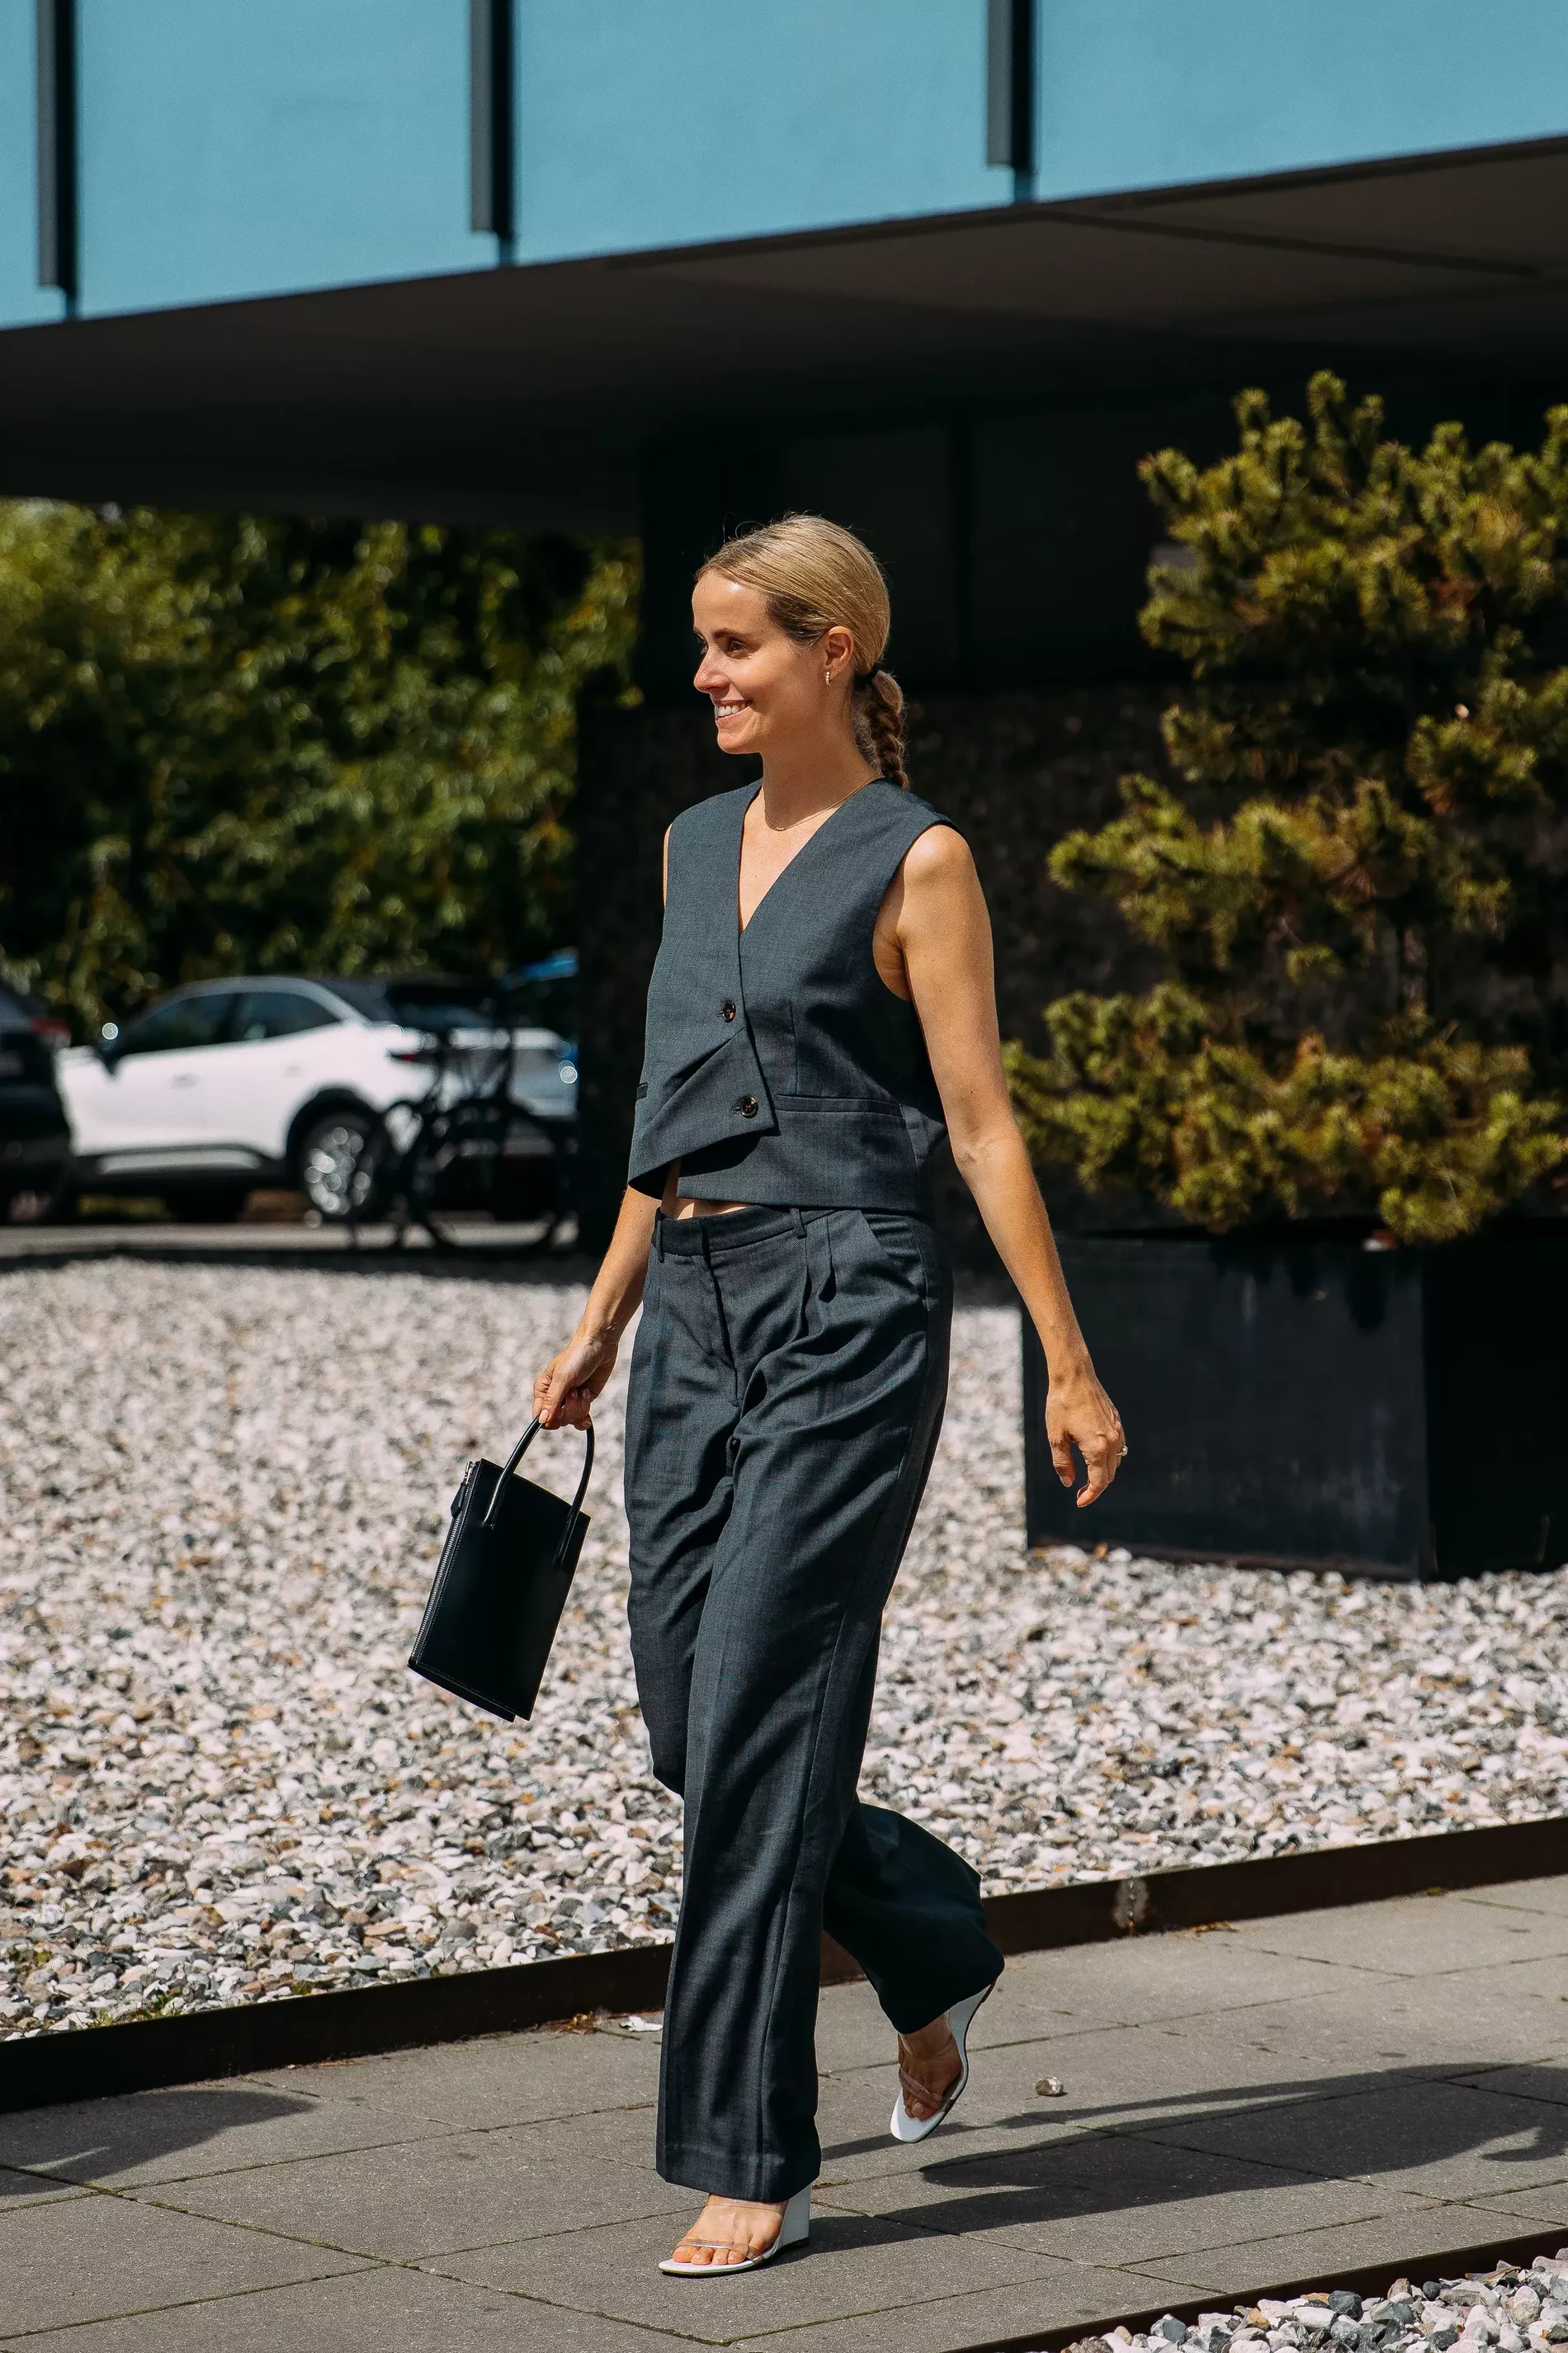 Copenhagen Fashion Week guest wears dark grey set 